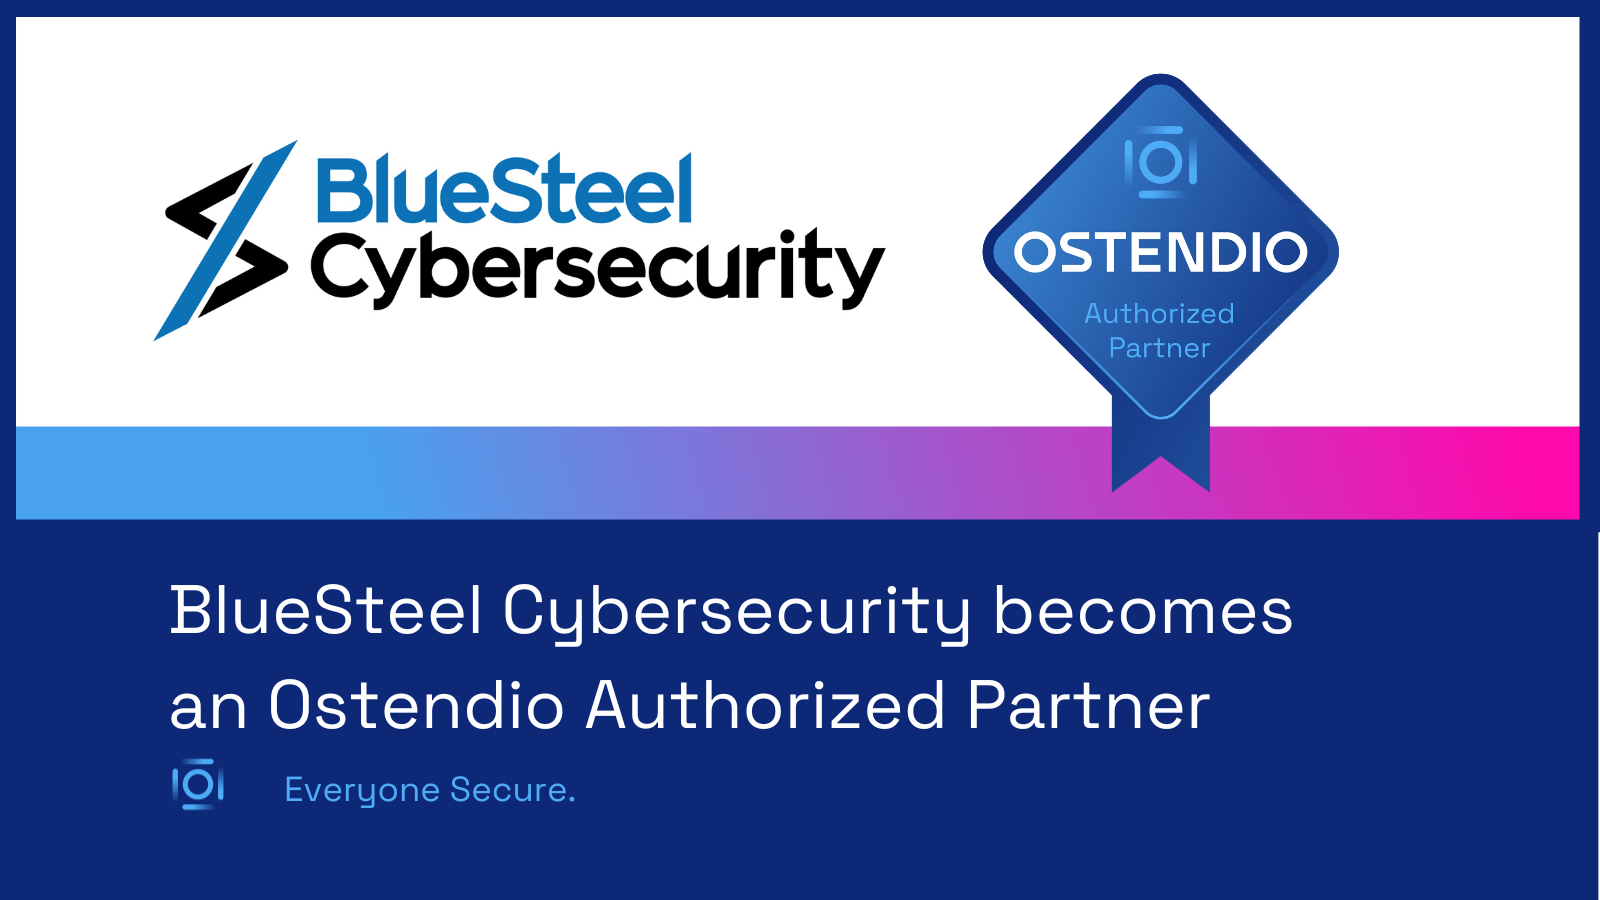 BlueSteel Cybersecurity is Ostendio Authorized Partner